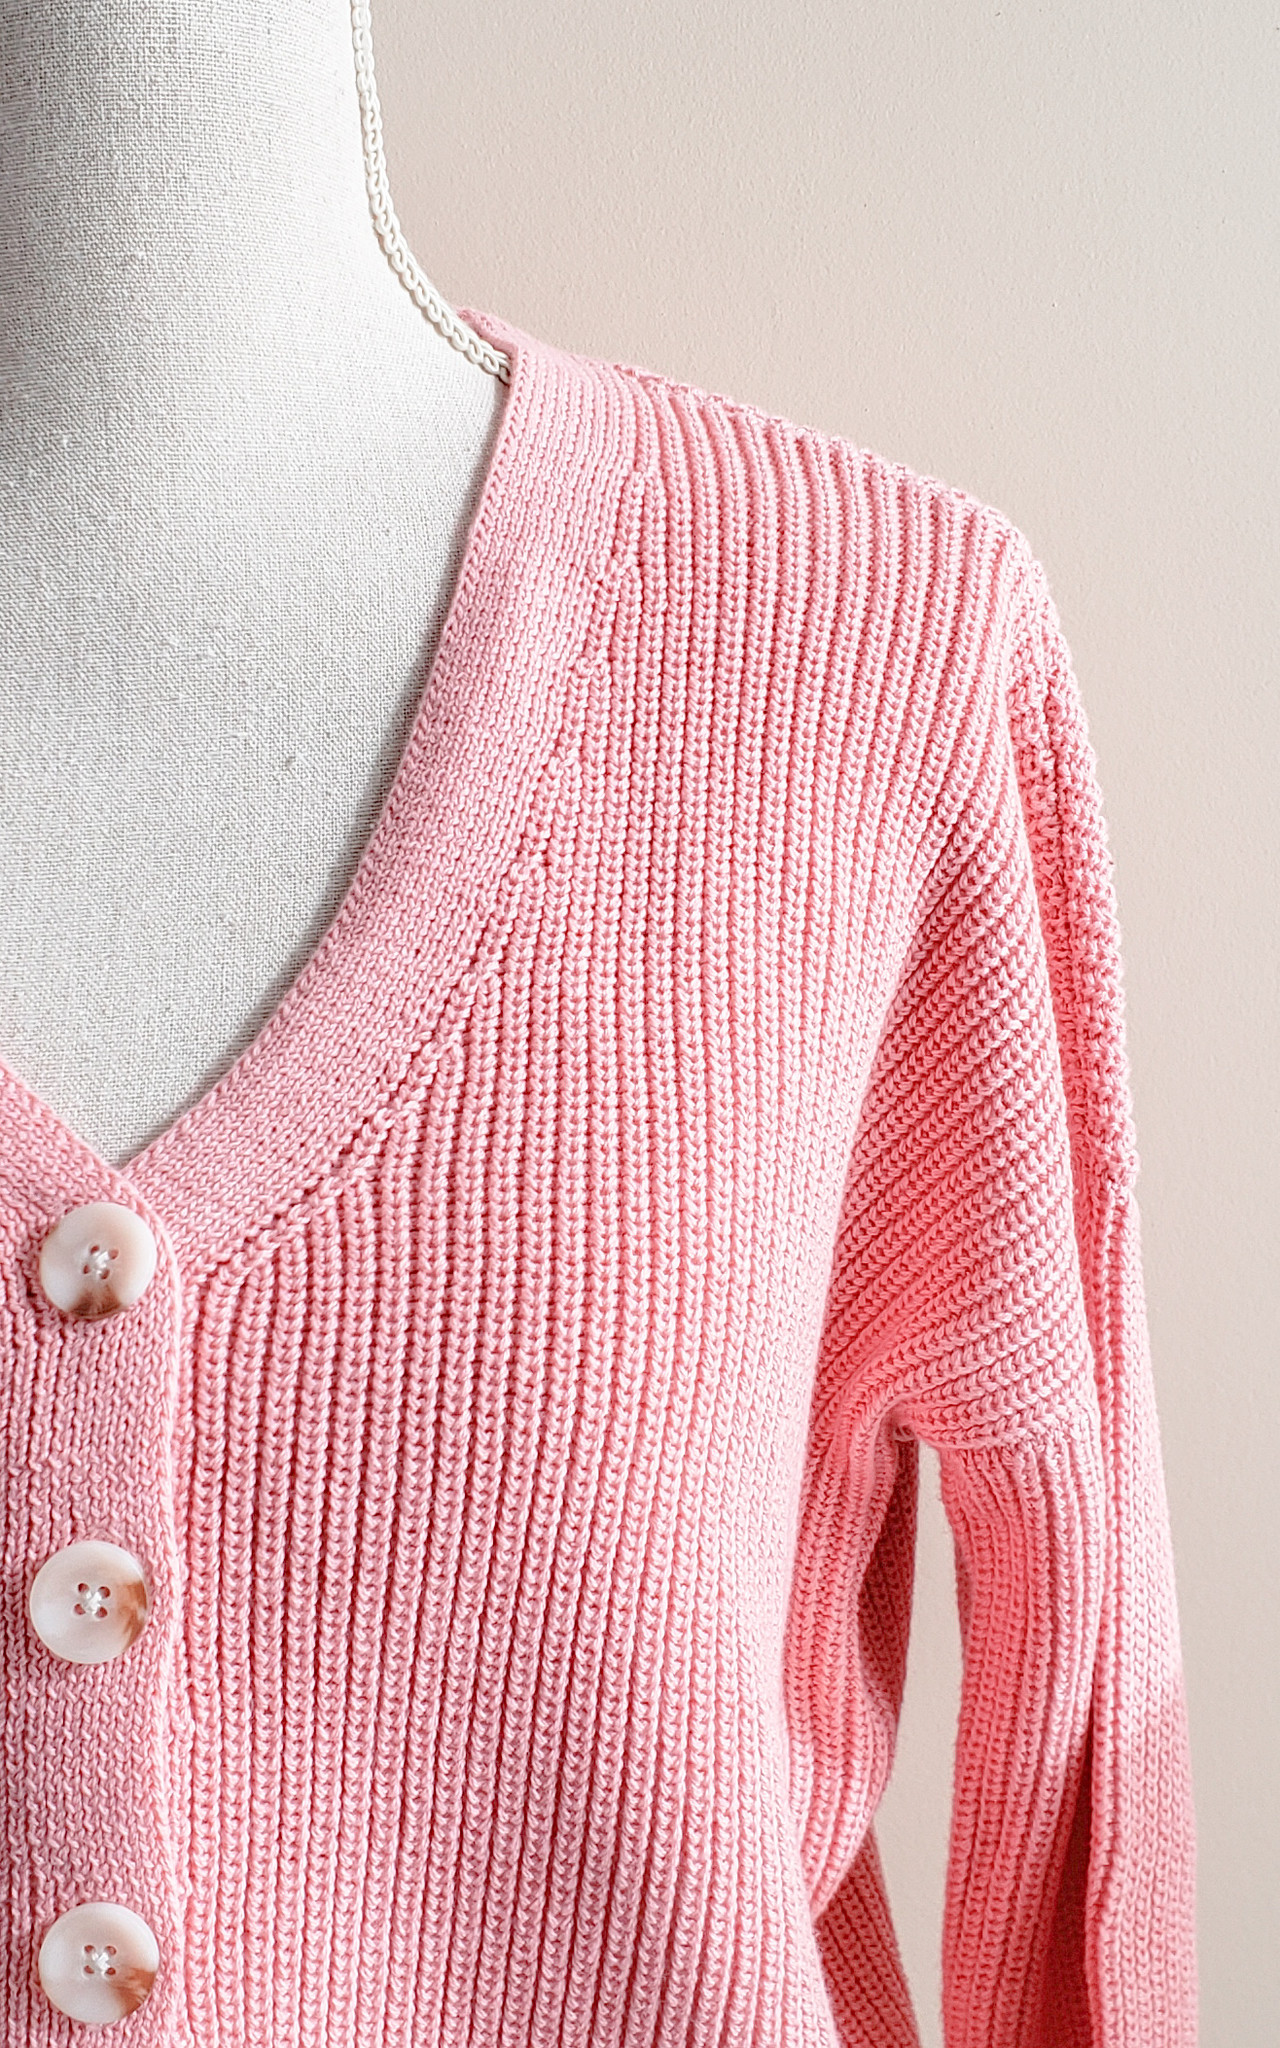 Morgan - Cable Knit Cardigan (Pink)